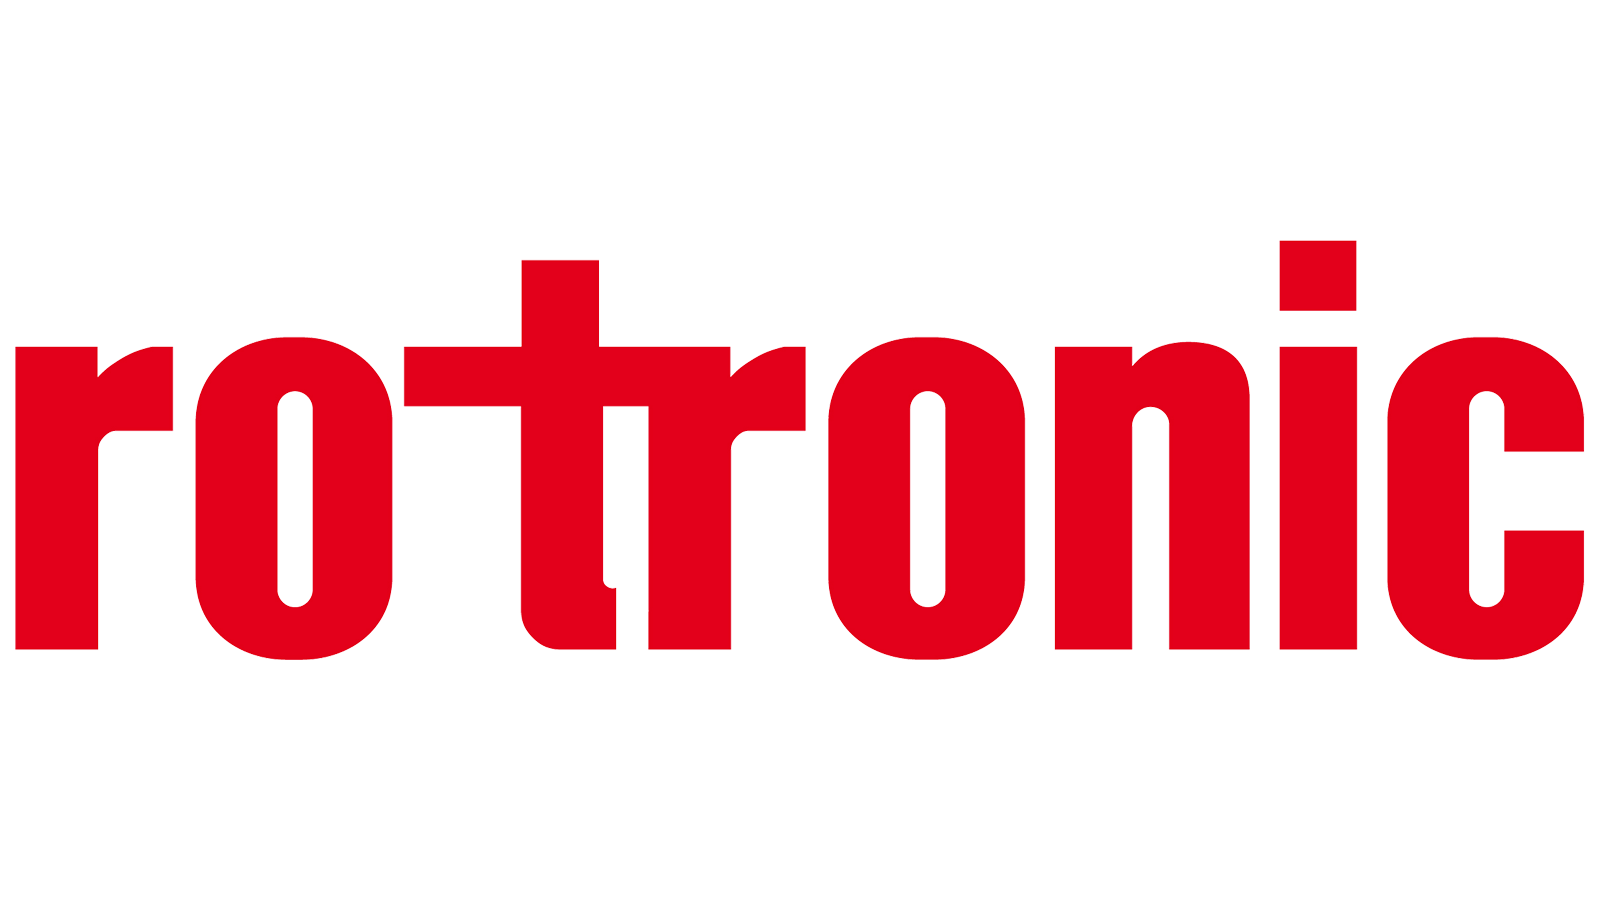 www.rotronic.com